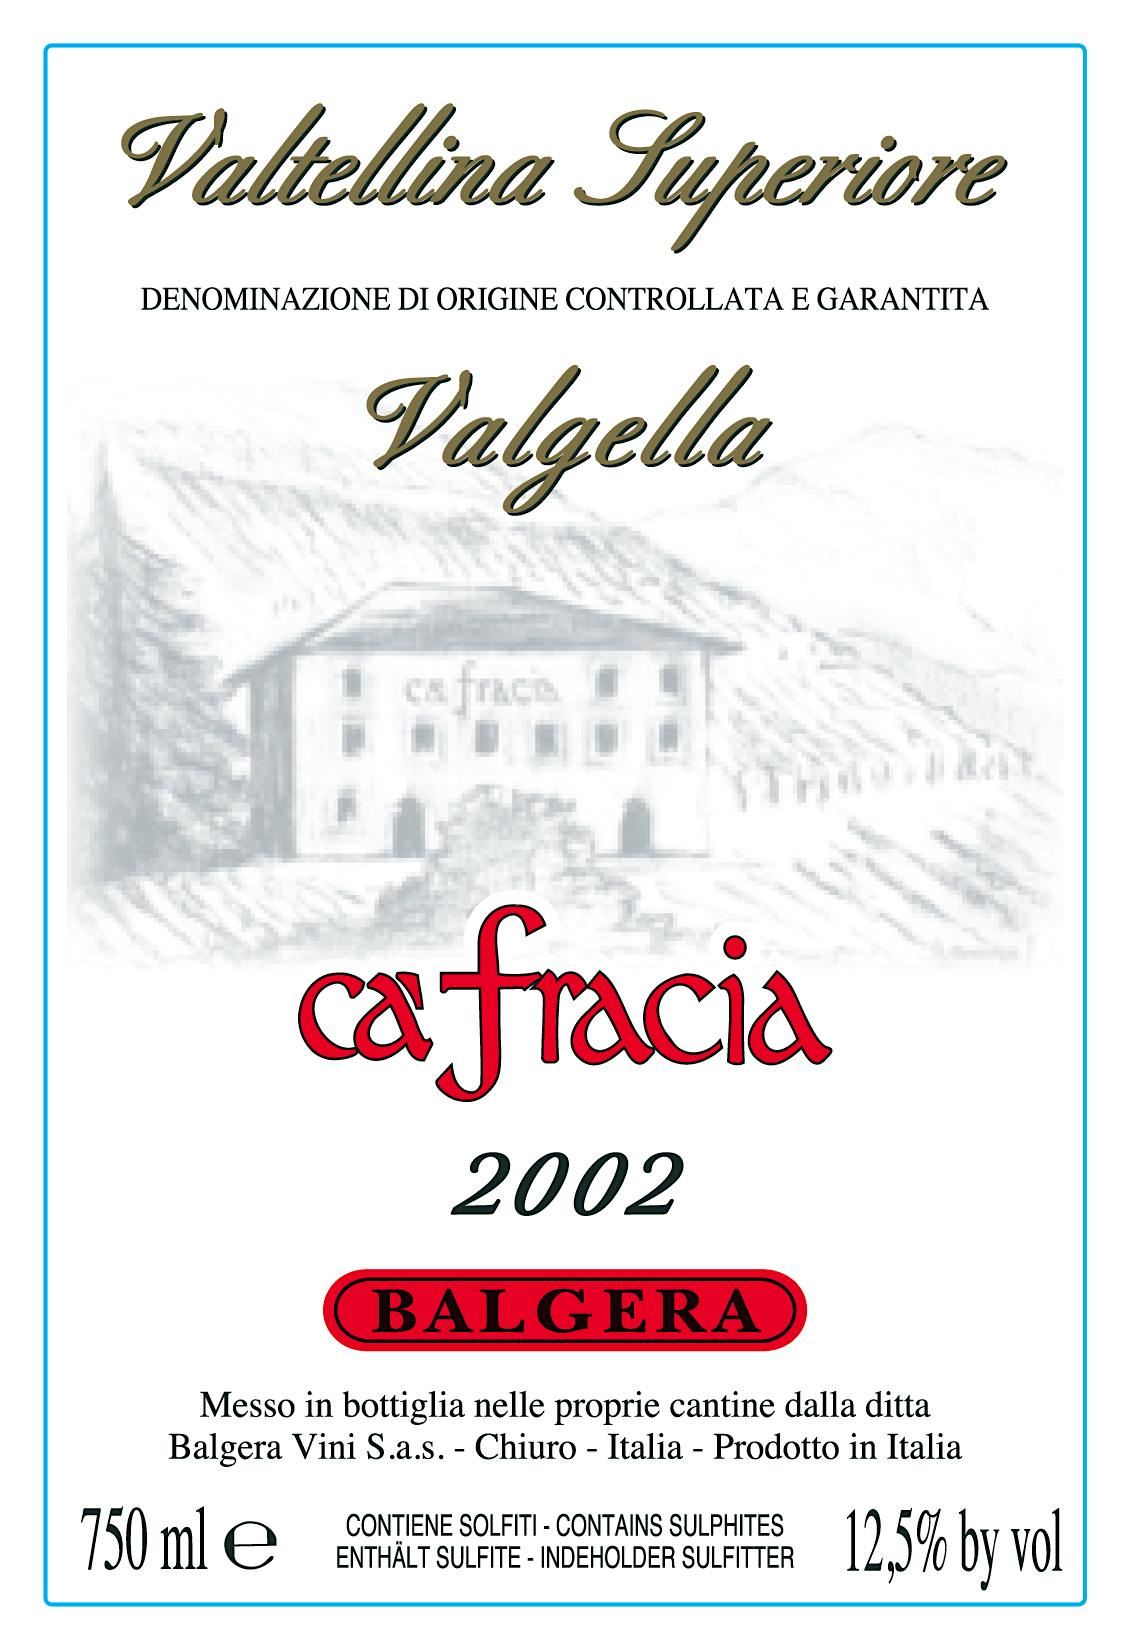 Label for Balgera